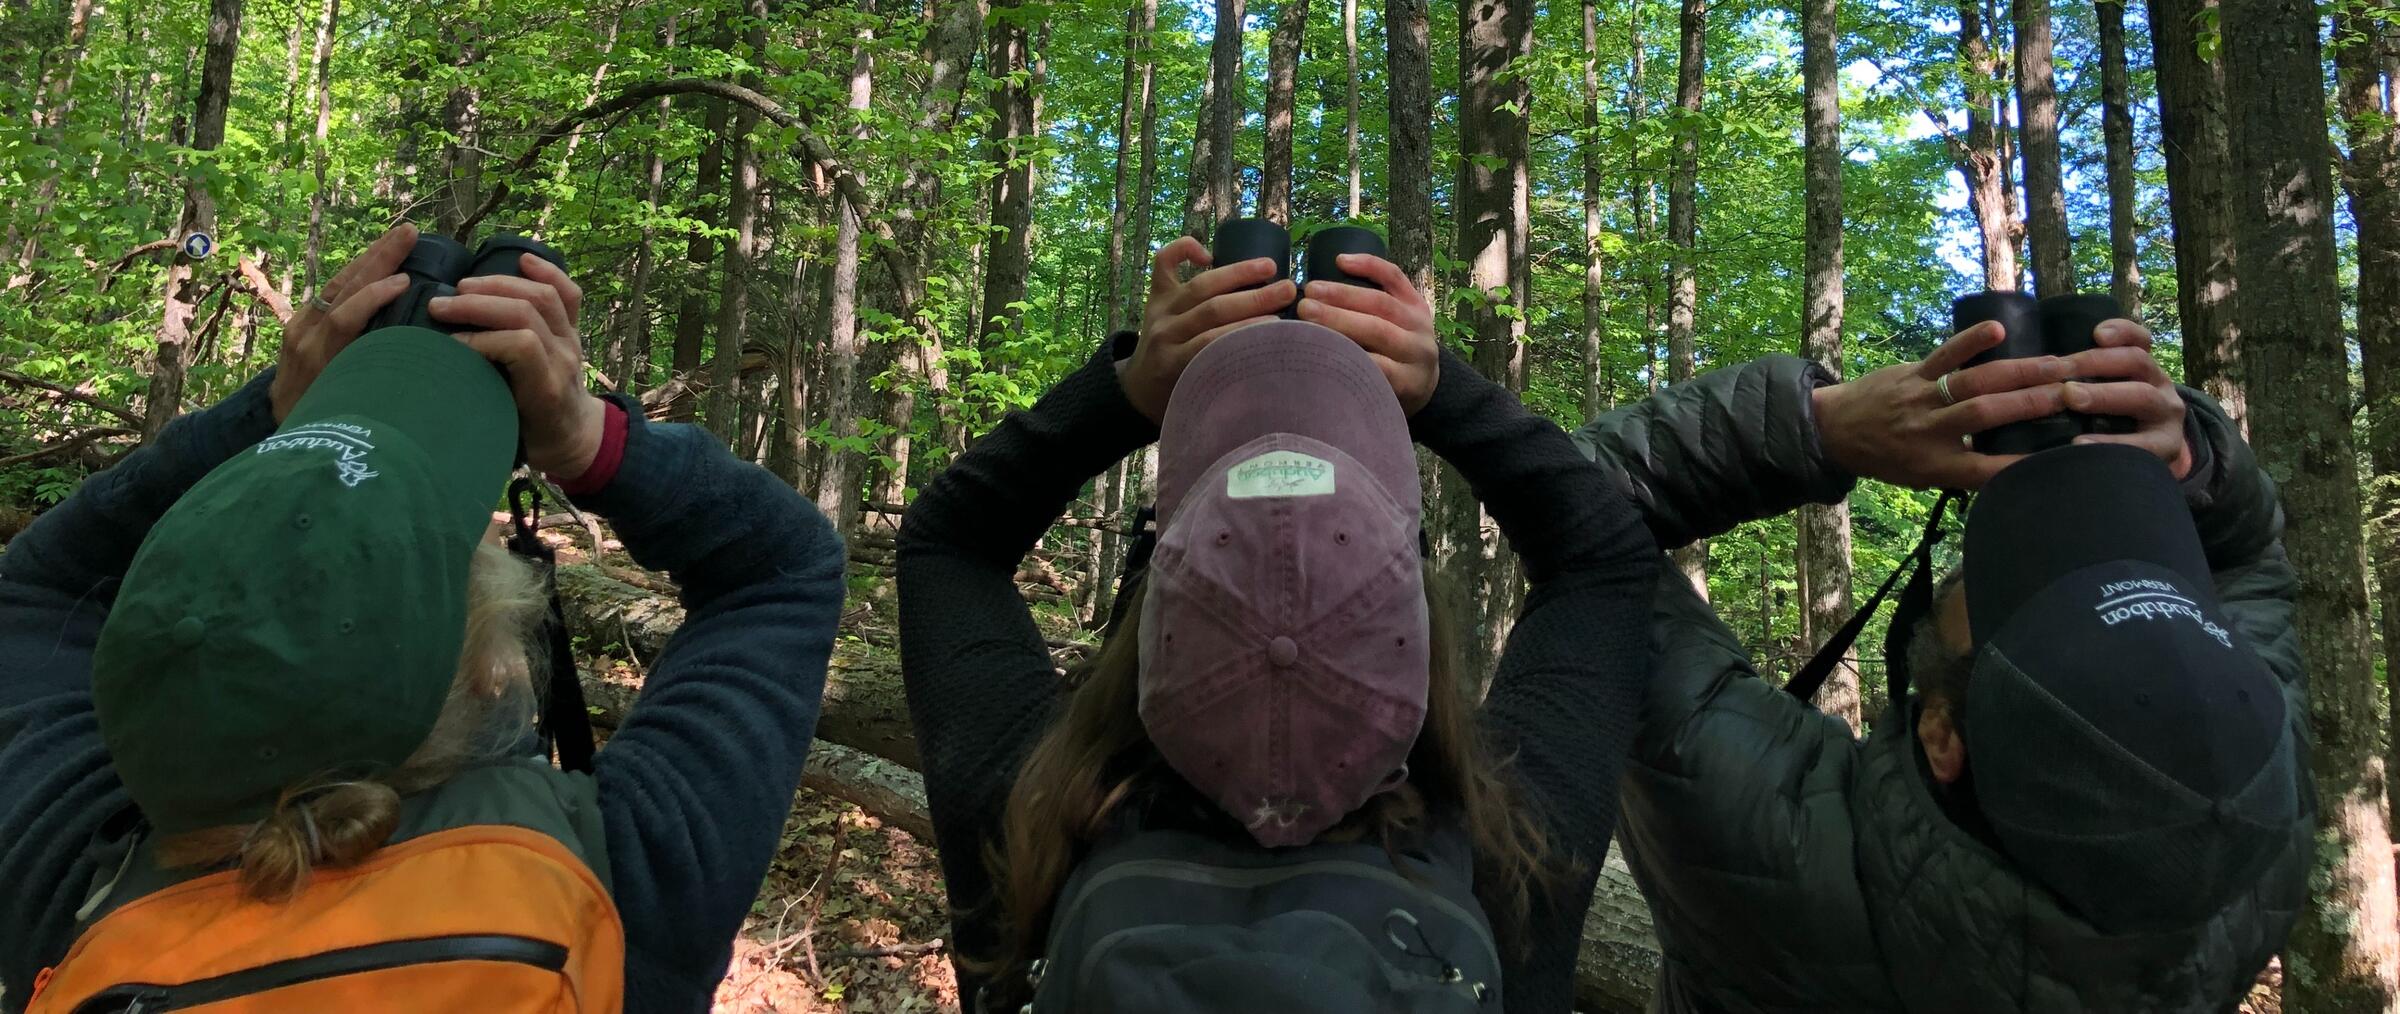 Three birders in Audubon Vermont hats search for birds with binoculars